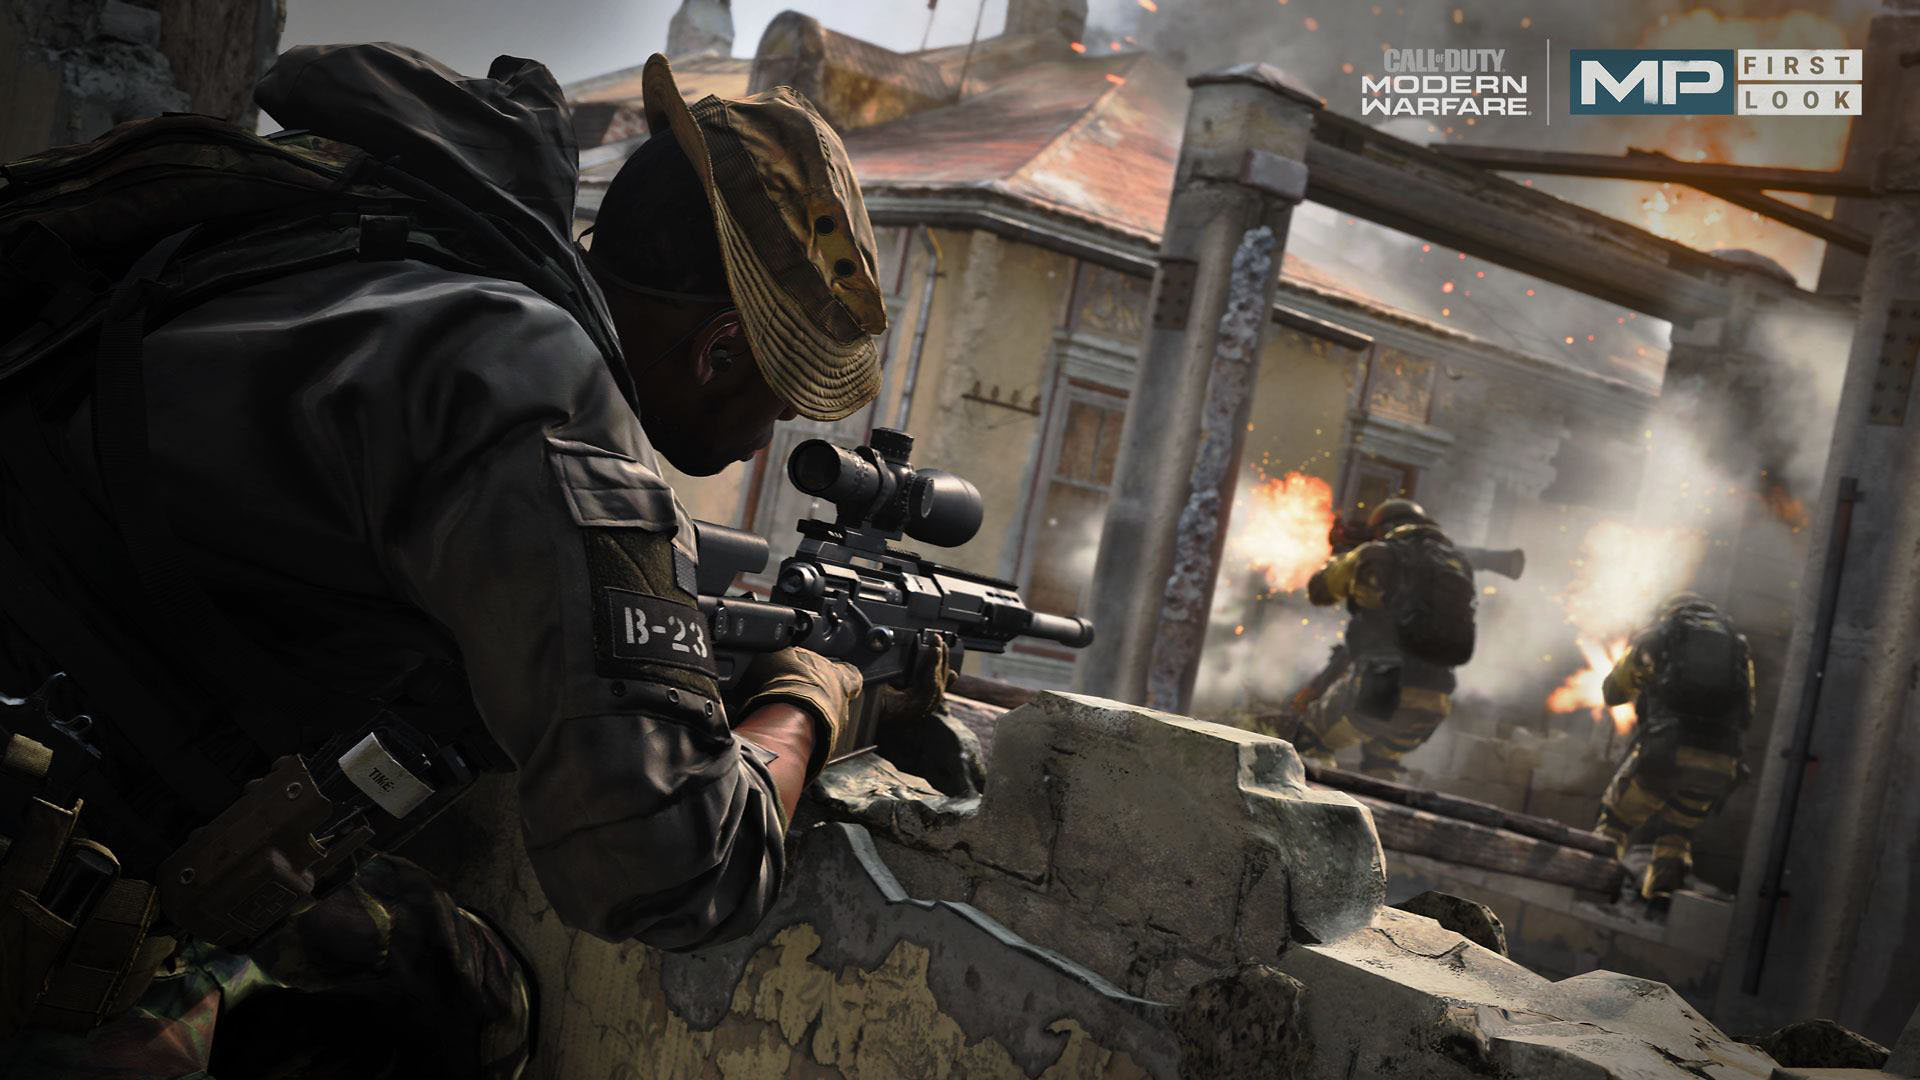 Игры кал оф дьюти модерн варфаре. Modern Warfare 2019. Call of Duty: Modern Warfare. Call of Duty: Modern Warfare (игра, 2019). Калов дьюти MW 2019.